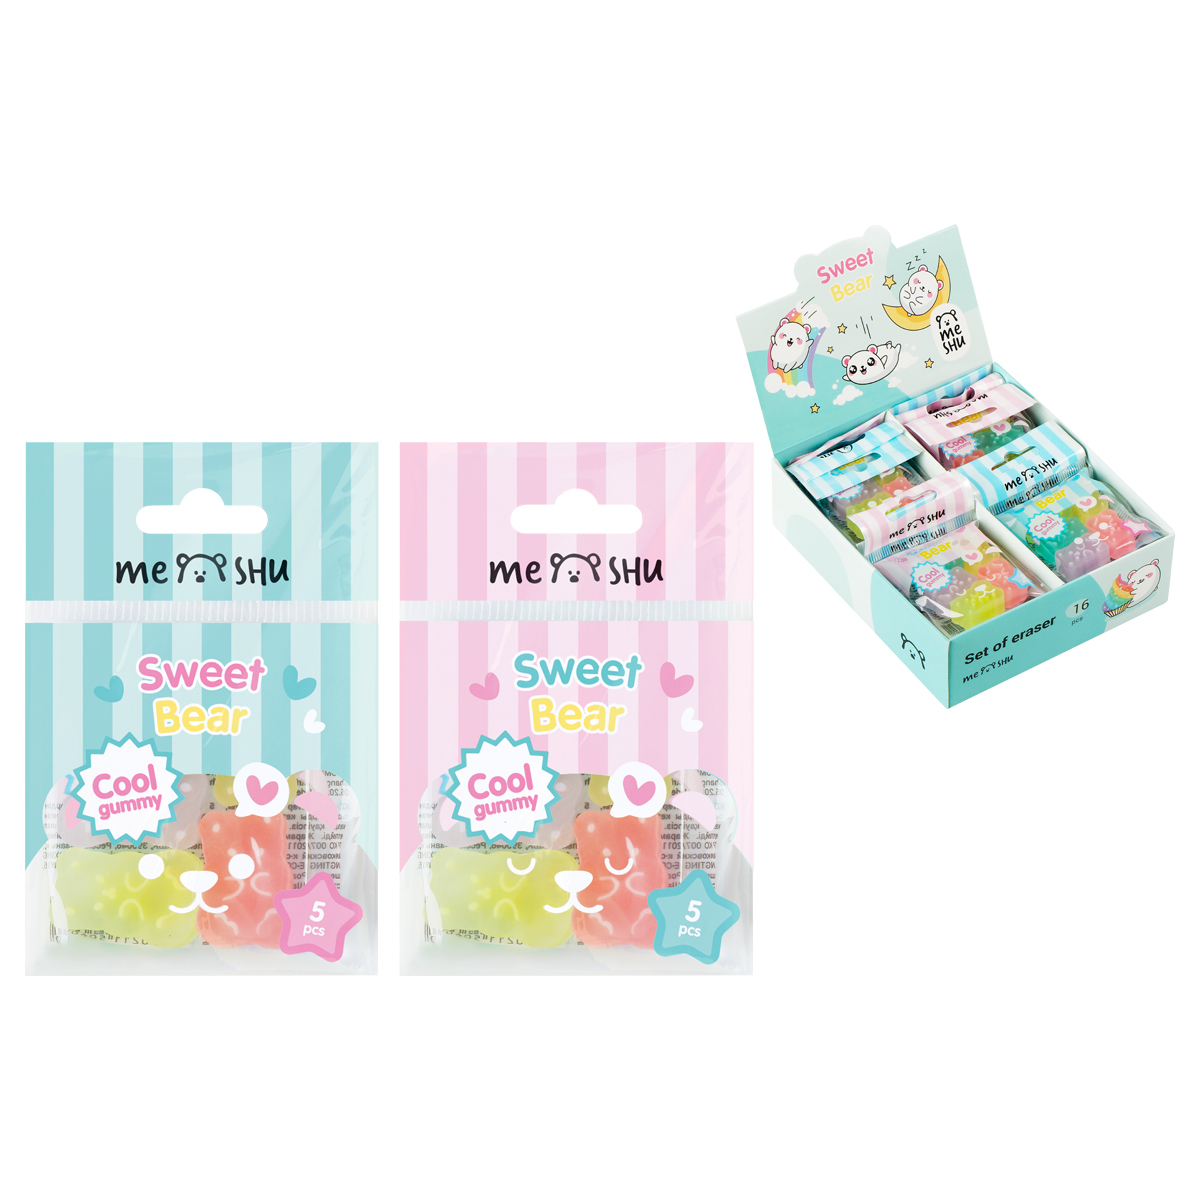     MESHU  Candy Bear  5., , 20*15*9 (MS_52607)